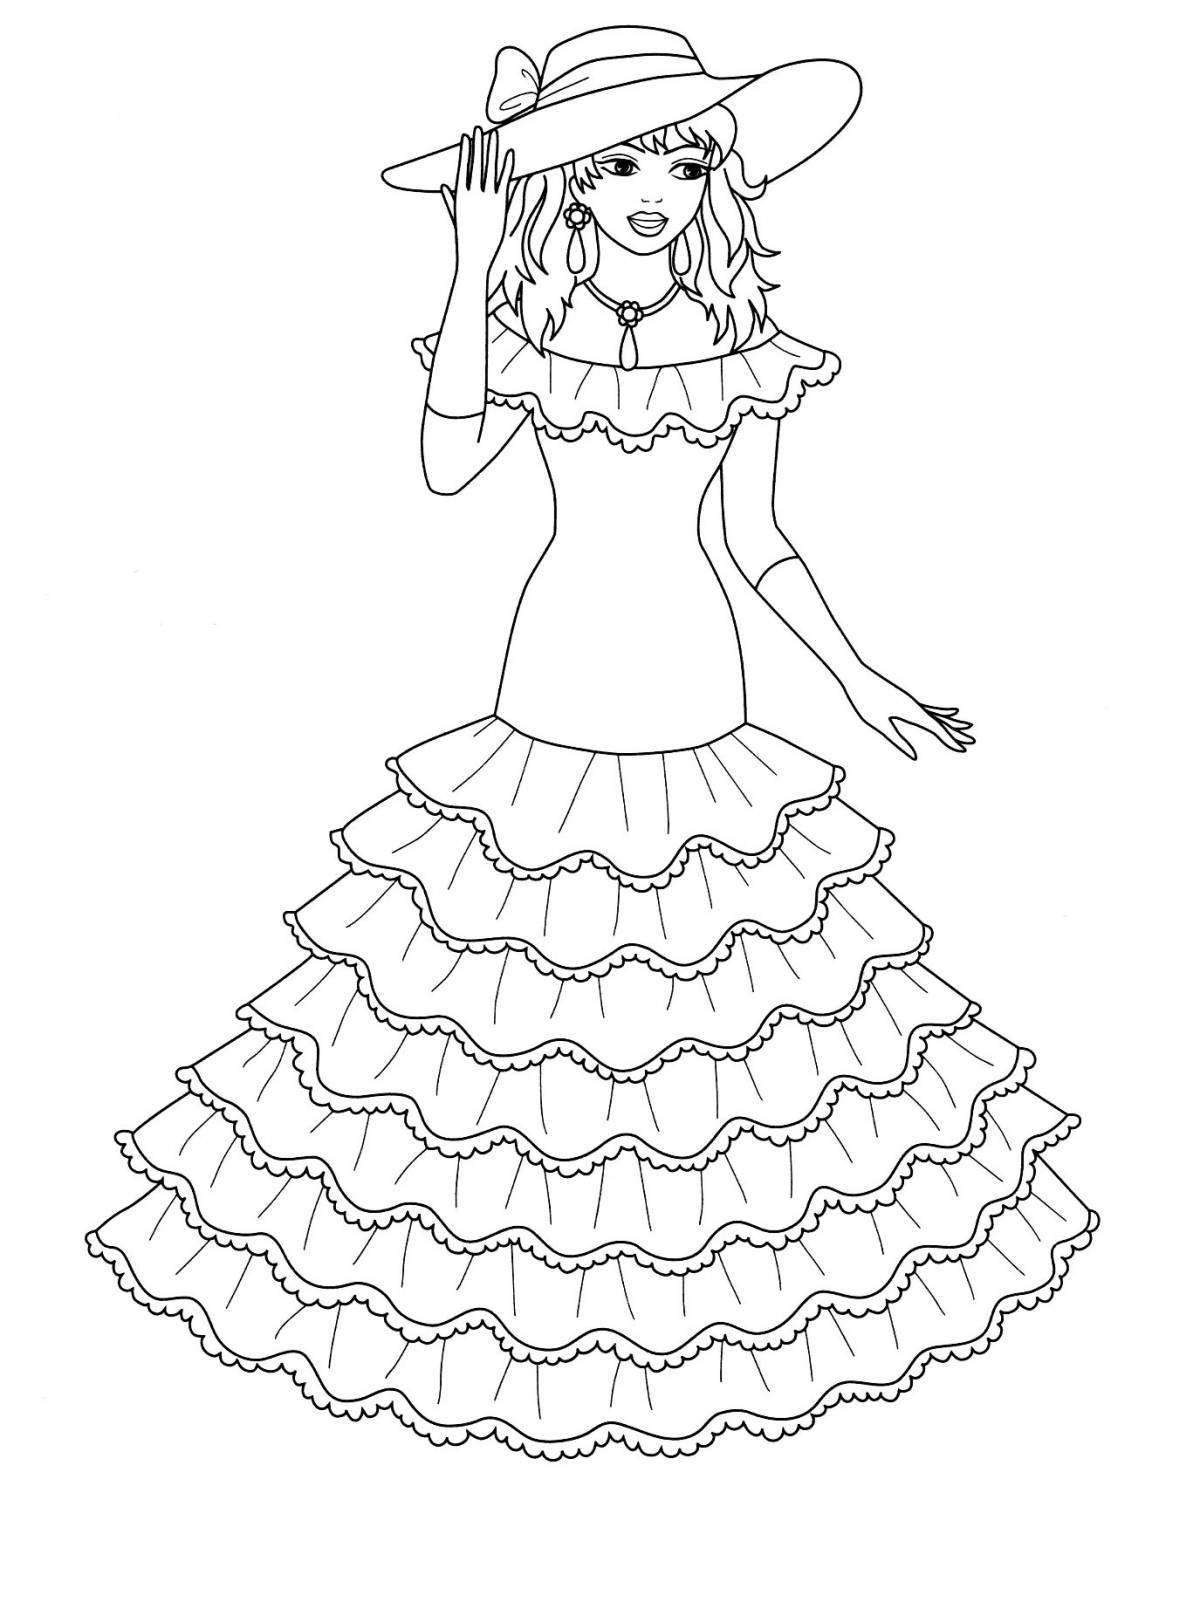 Princess dress regal coloring page